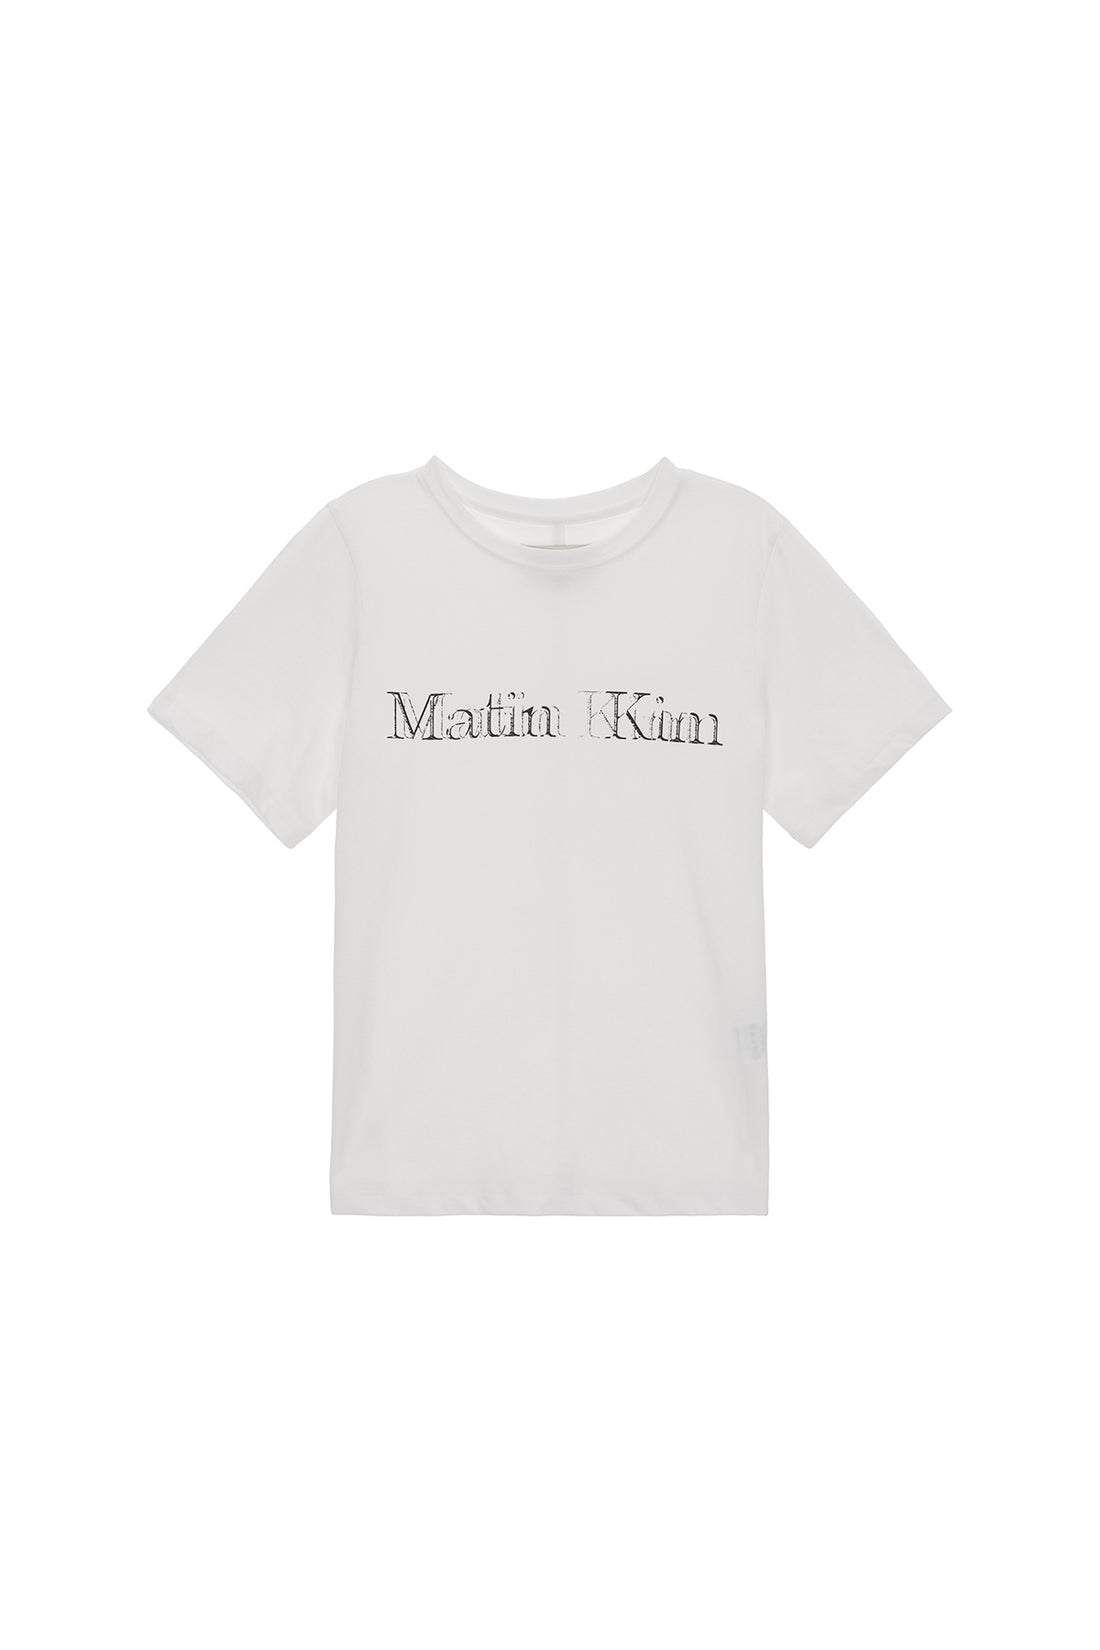 MATIN KIM SHADOW TOP IN WHITE